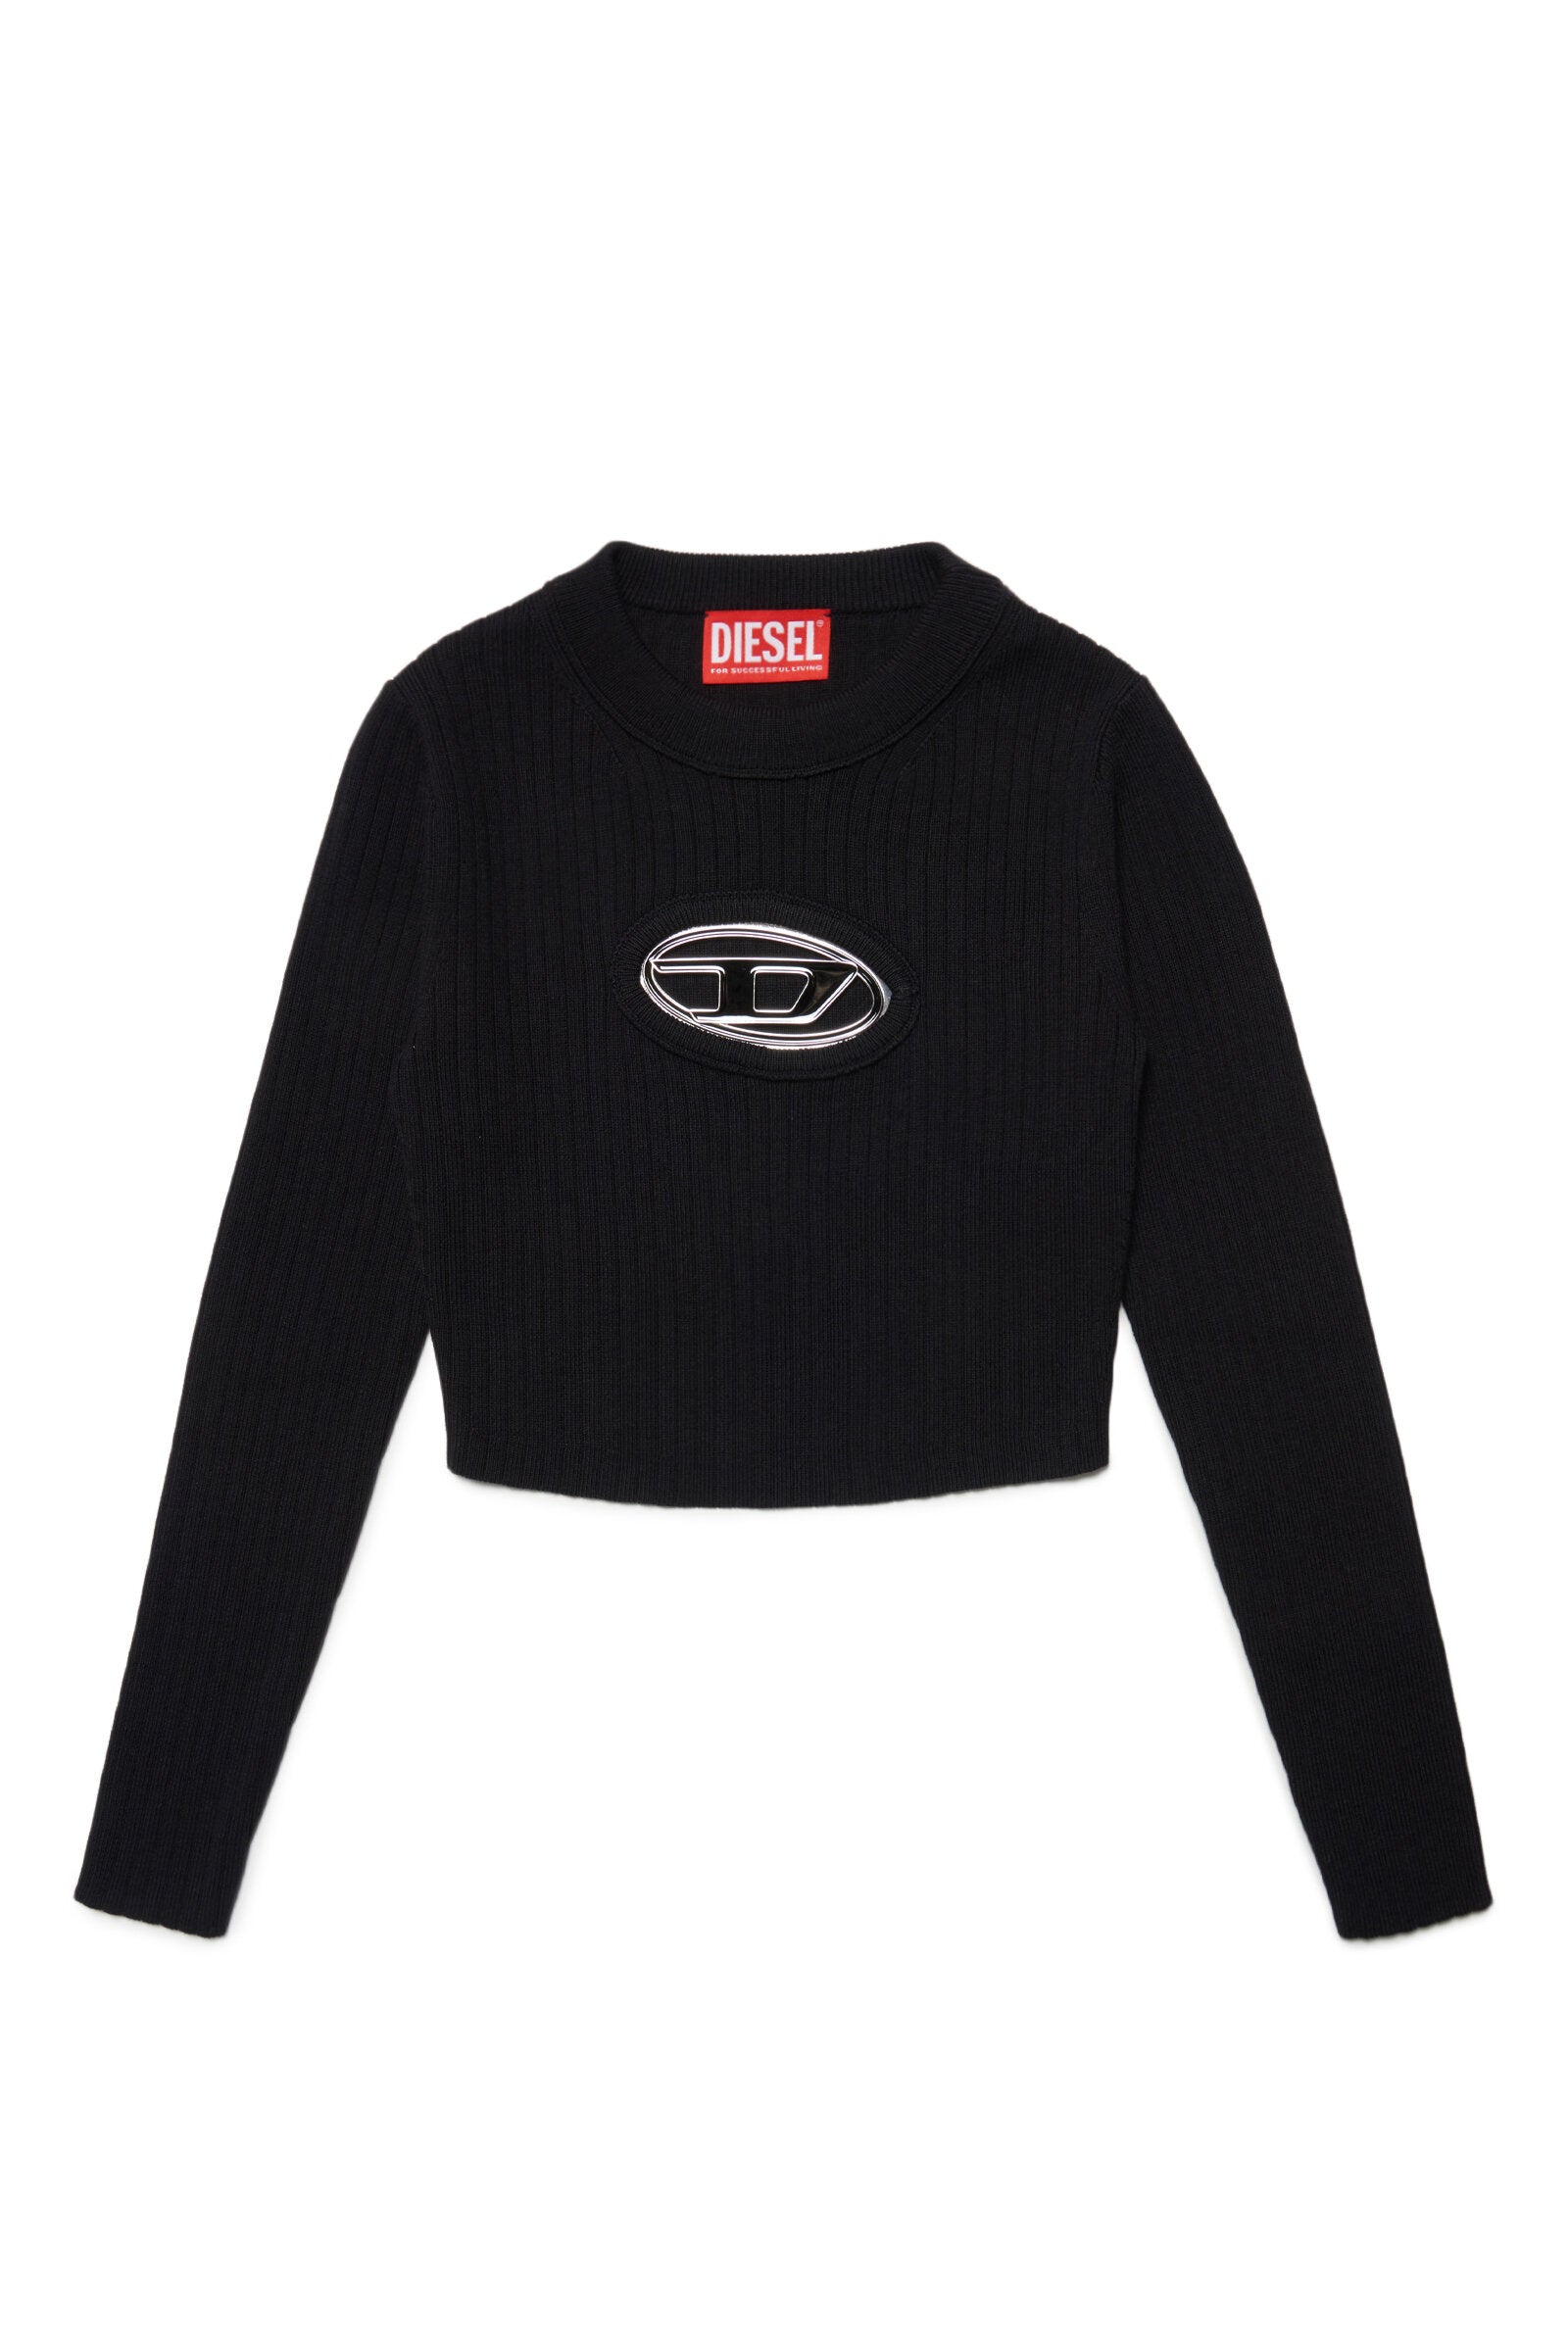 telex Duur rem Diesel black ribbed sweater with metal logo for children | Brave Kid